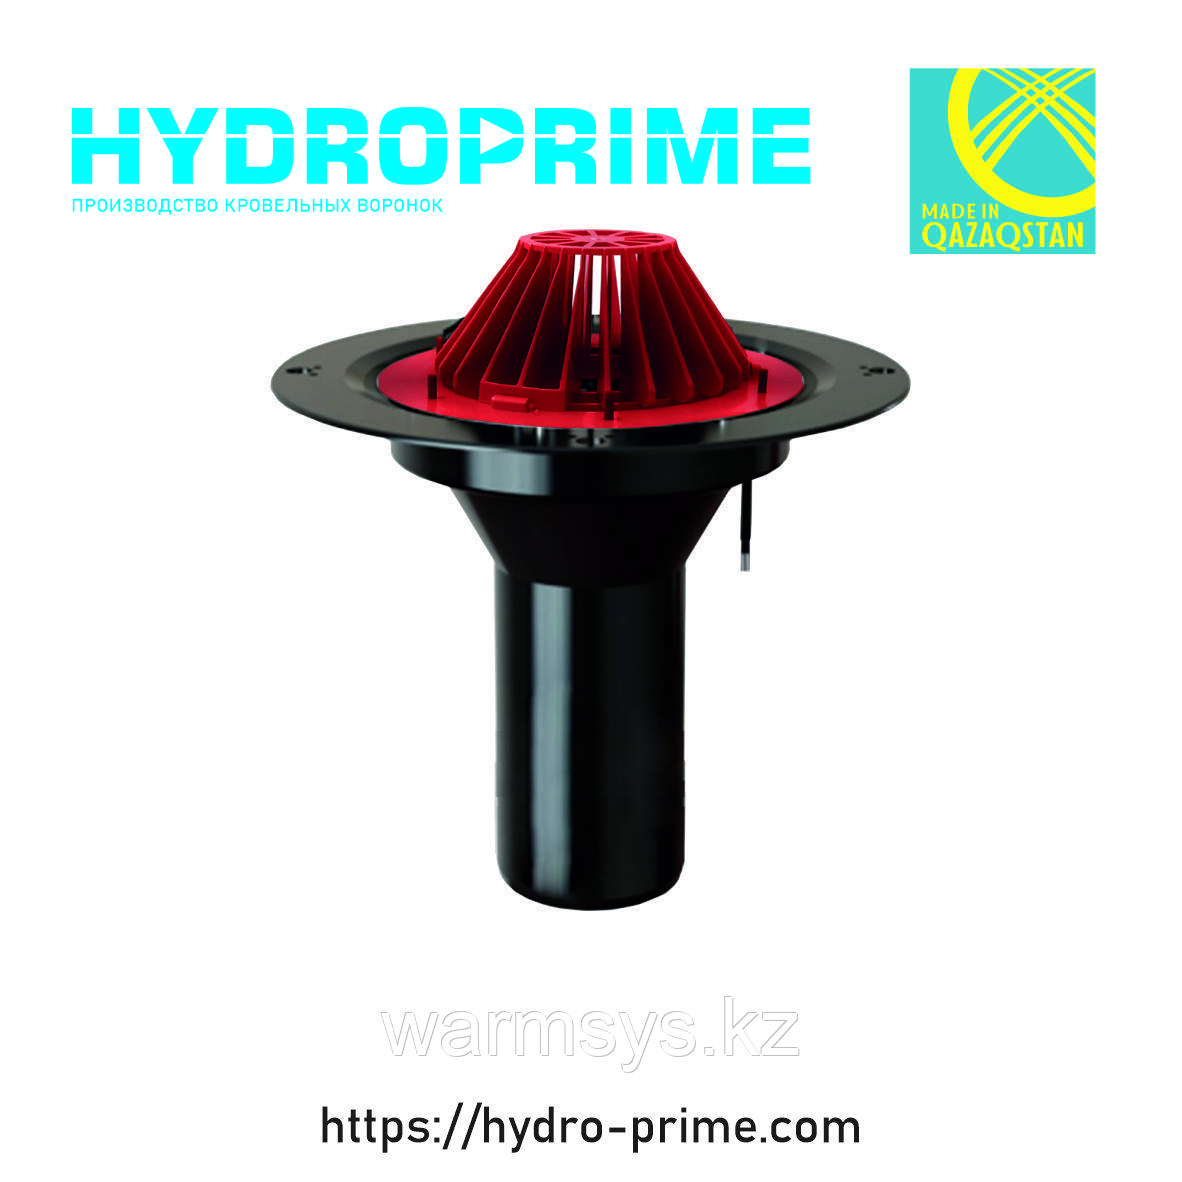 Кровельная воронка HydroPrime HPH 110x450 с электрообогревом, фото 1